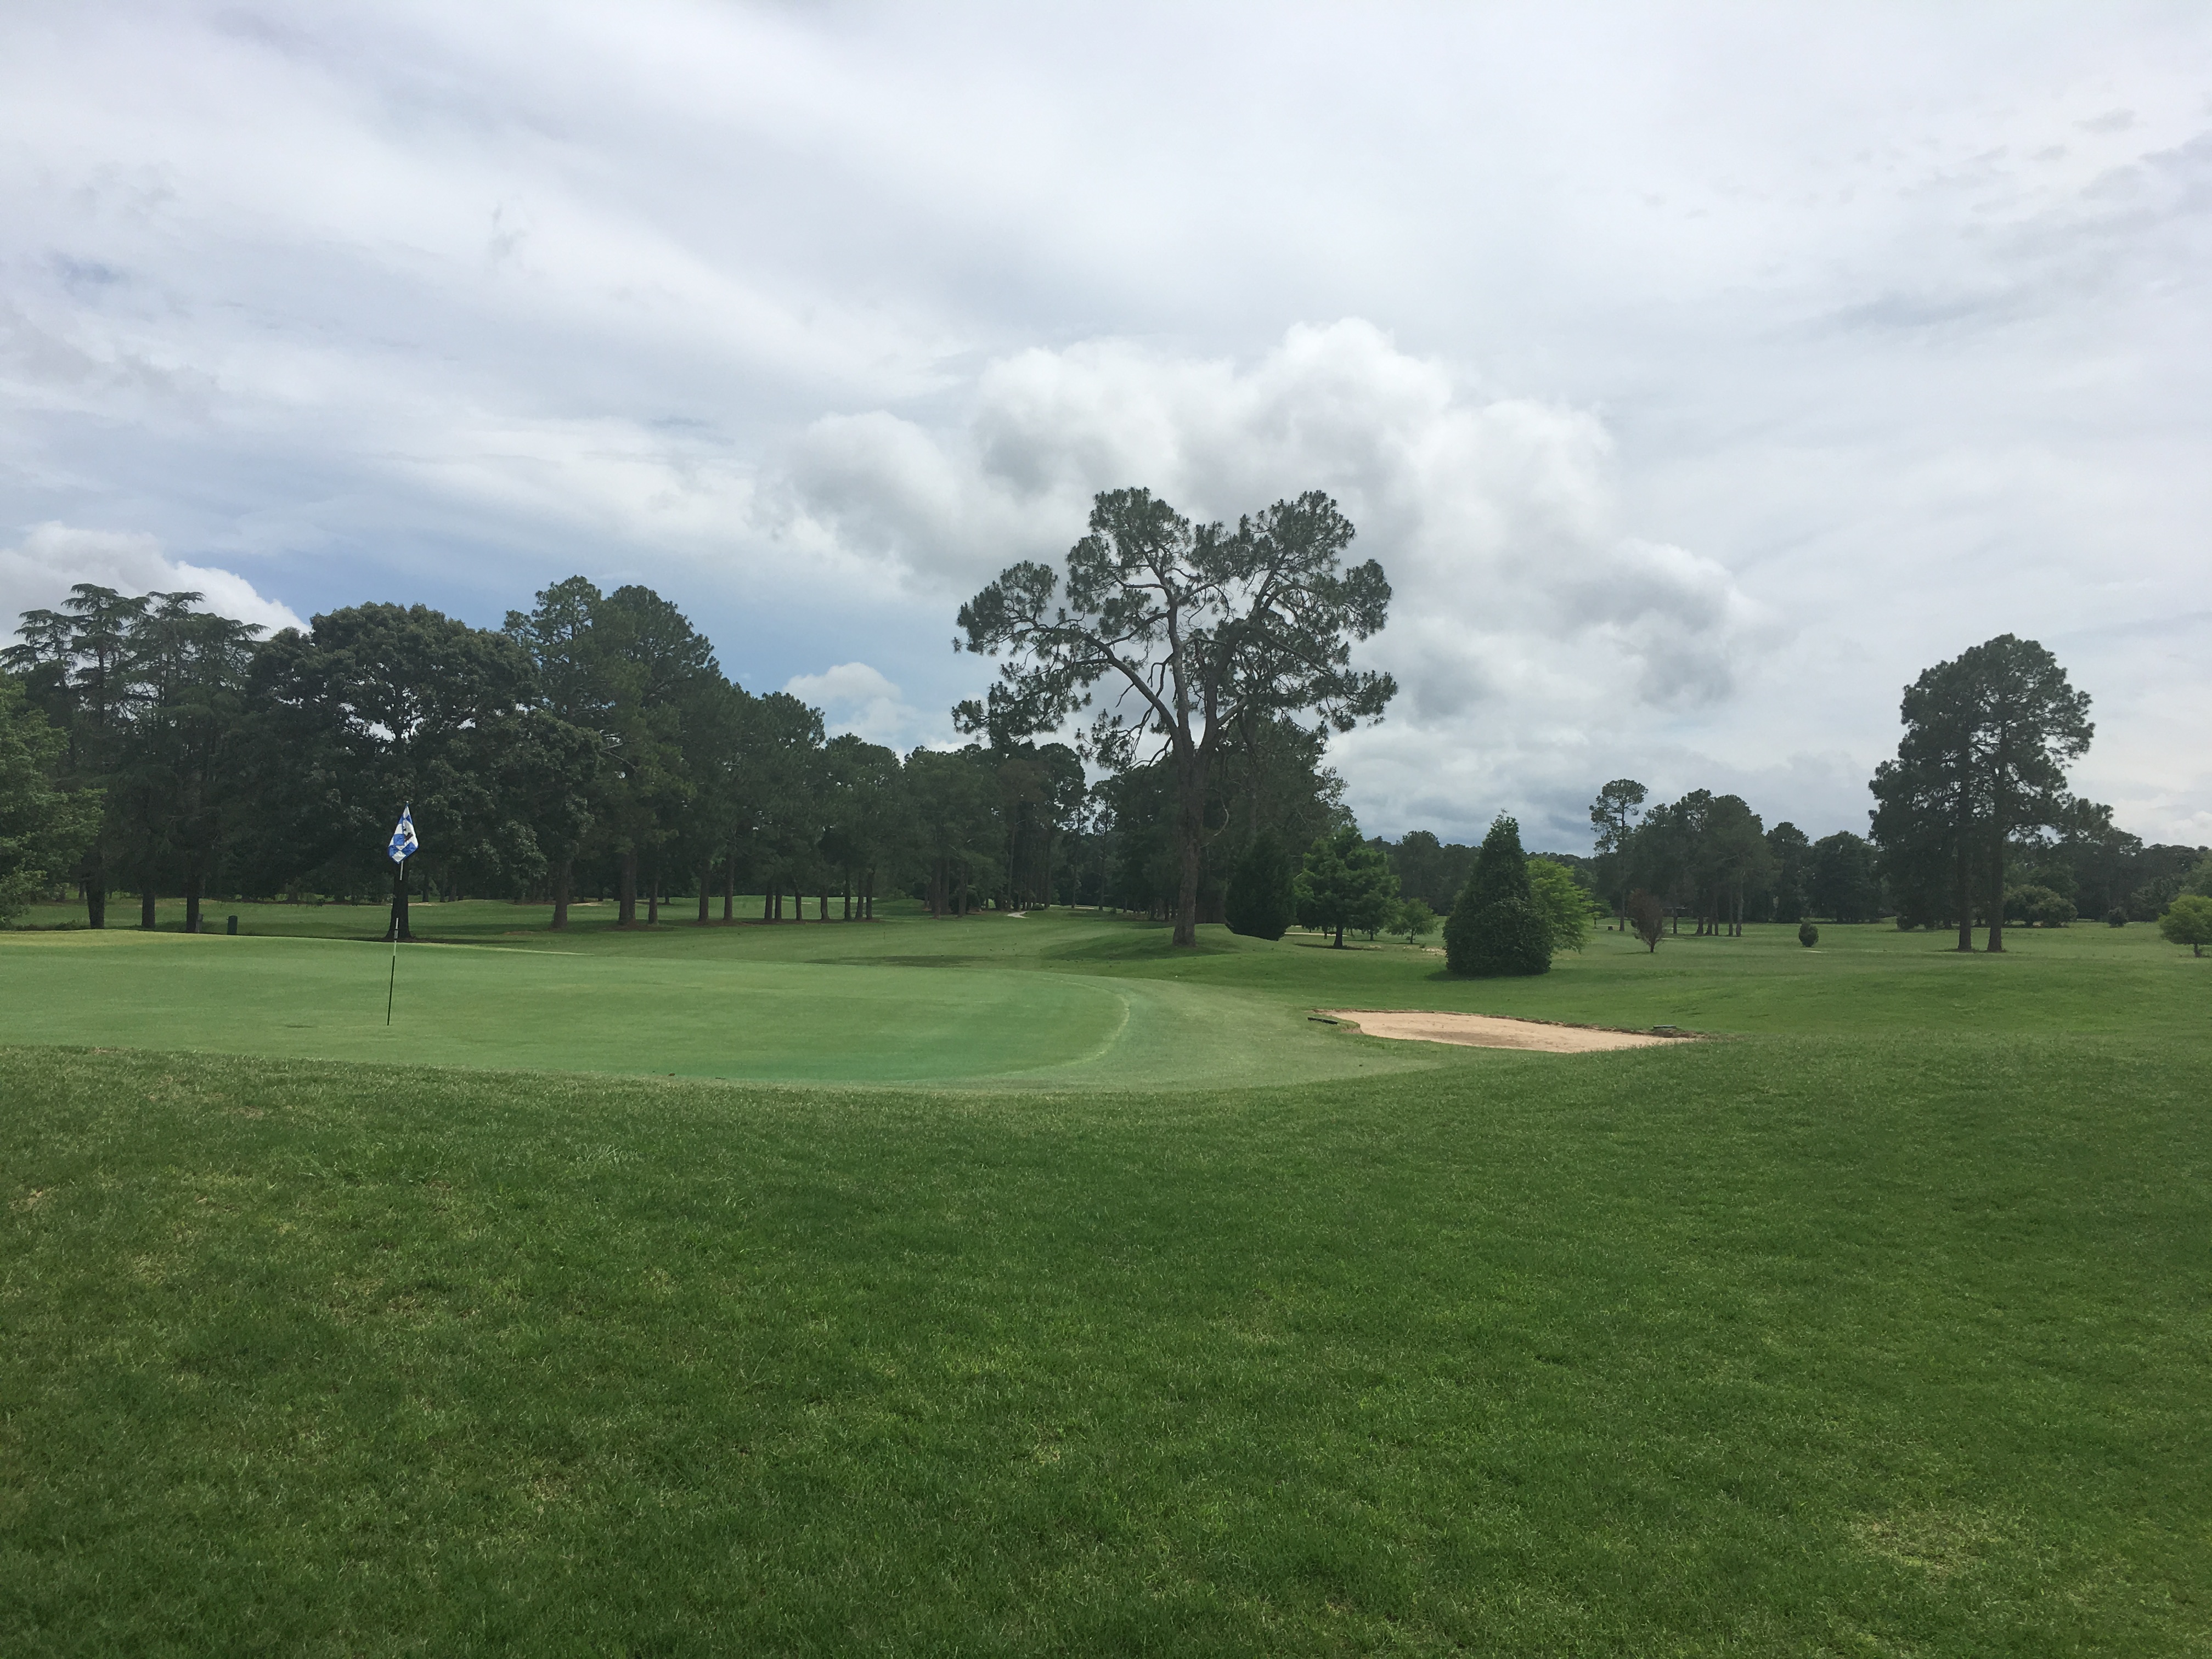 Golf Course Fairway